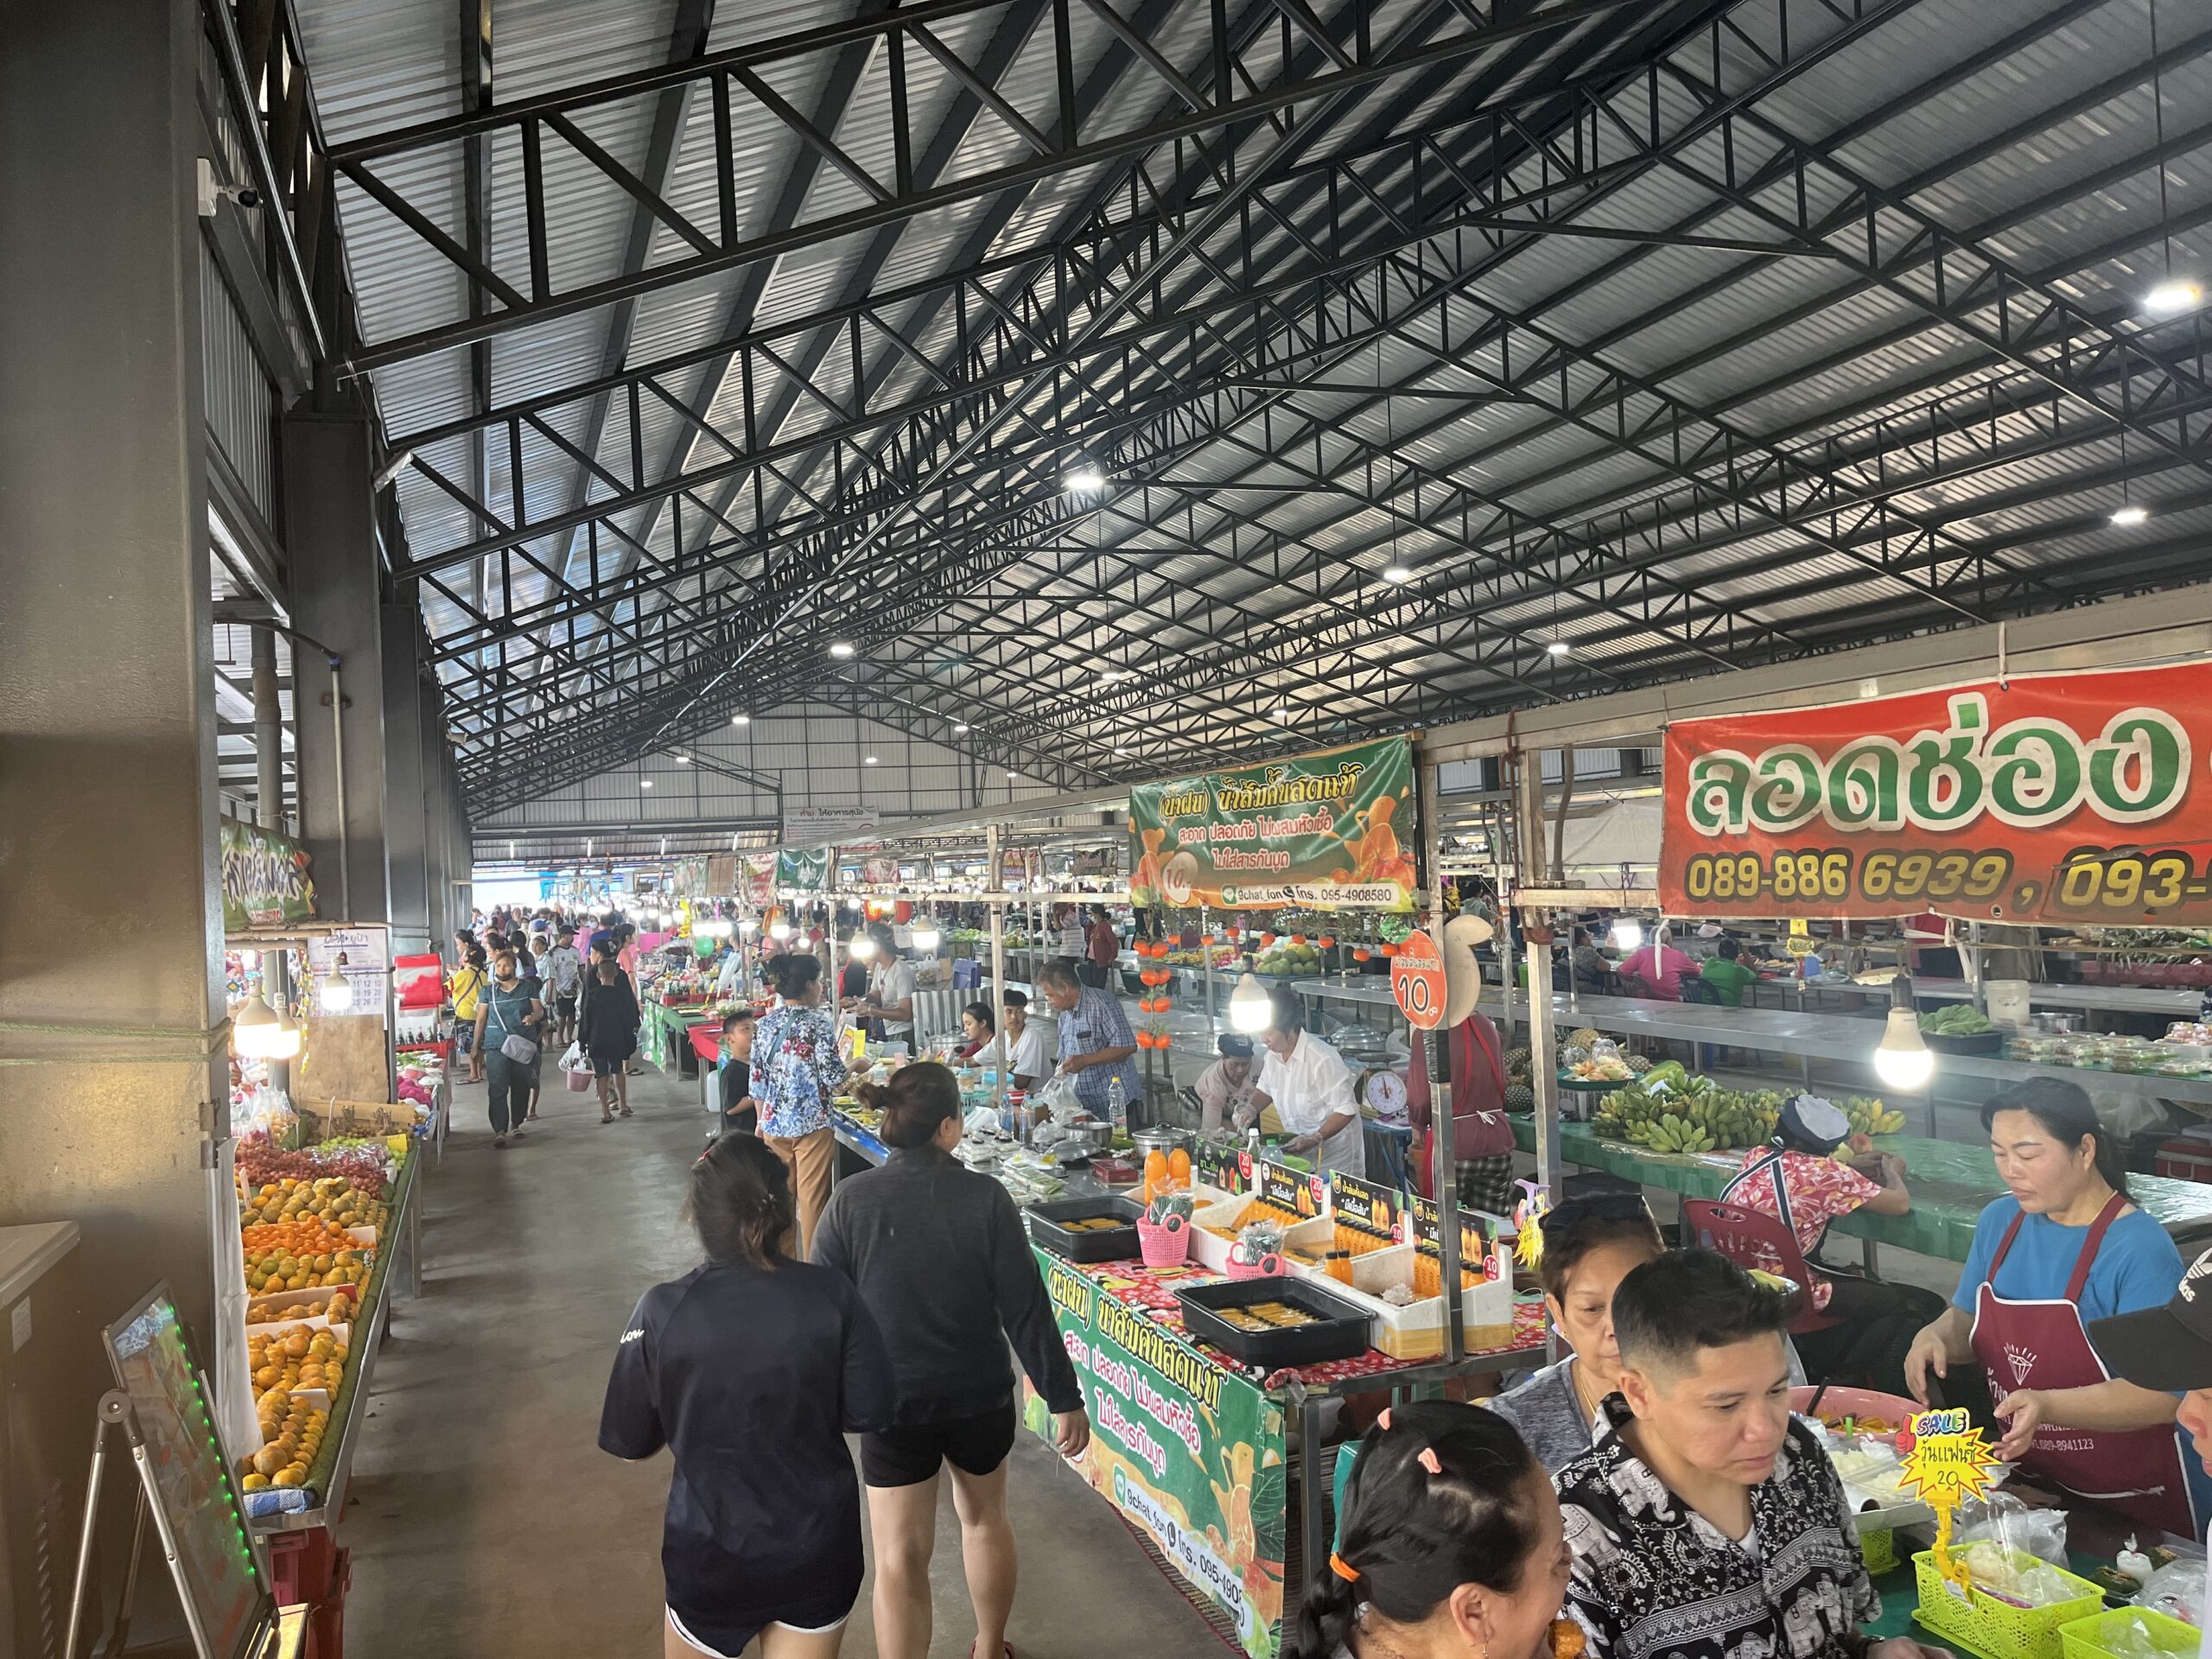 Sasi Thai Market Hosts Street Food Event - March 9 & 10